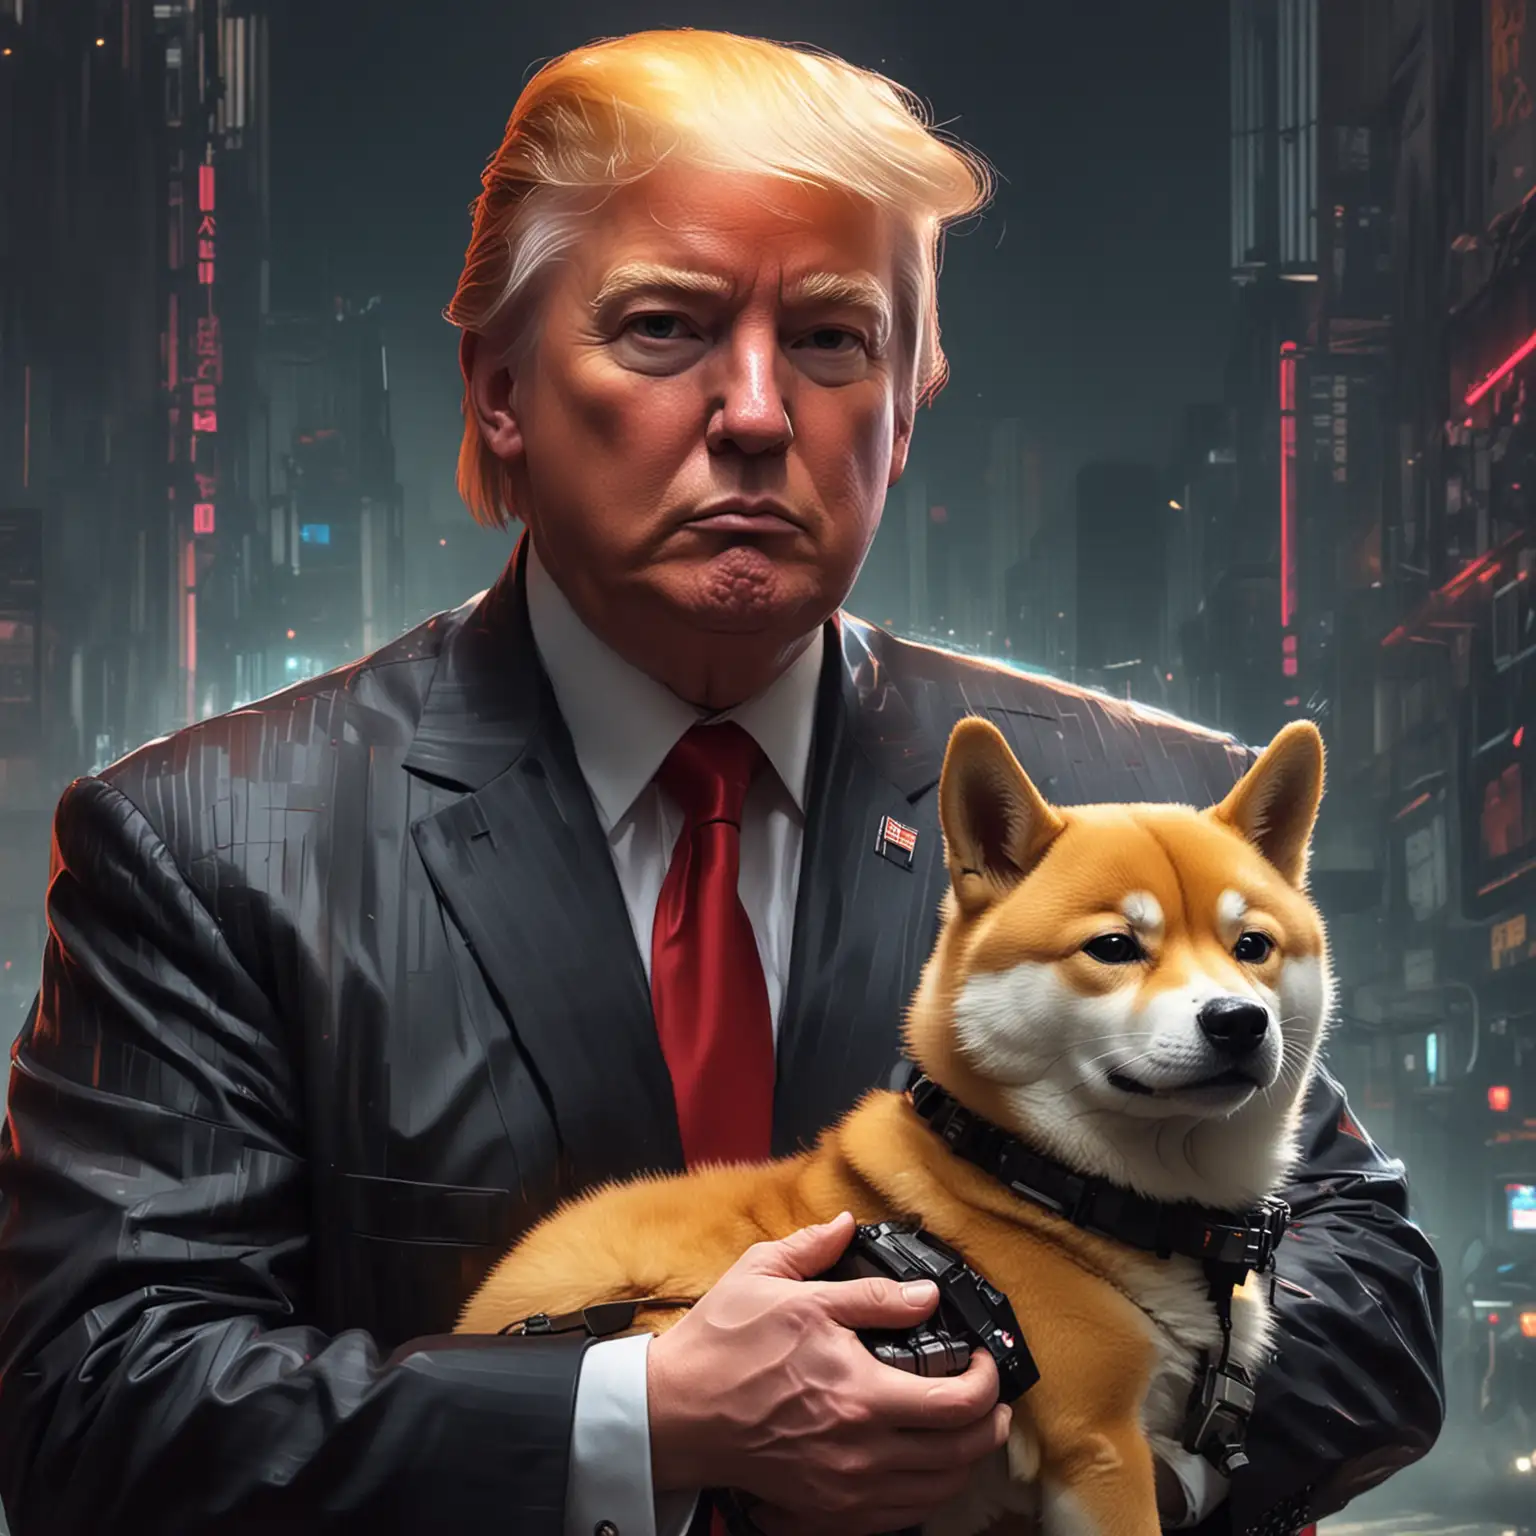 Donald Trump in cyberpunk style strokes the dog Shiba inu